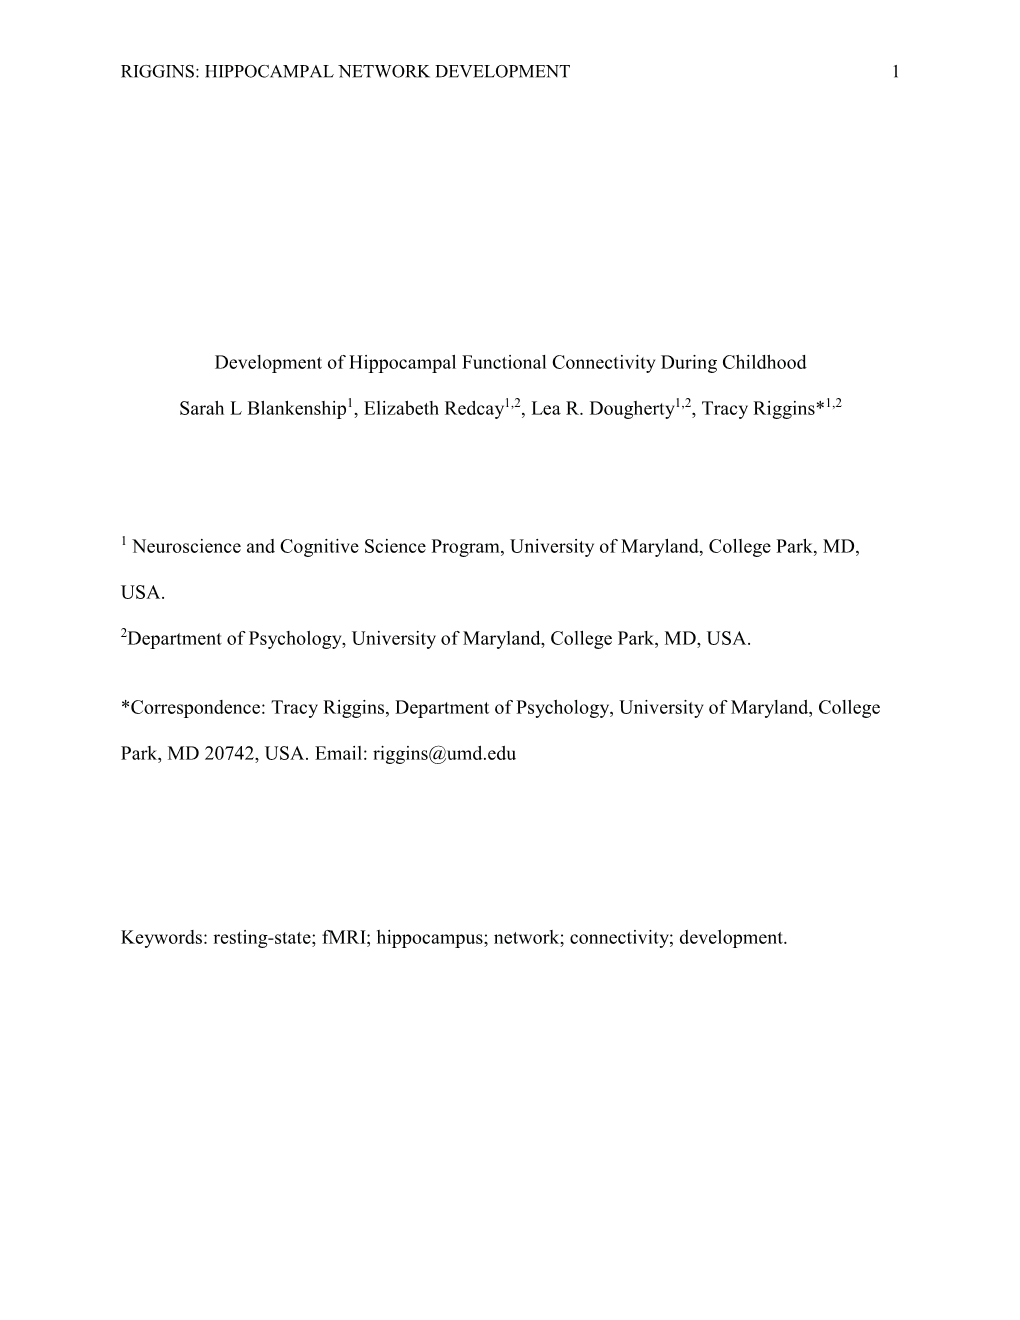 Development of Hippocampal Functional Connectivity During Childhood Sarah L Blankenship1, Elizabeth Redcay1,2, Lea R. Dougherty1